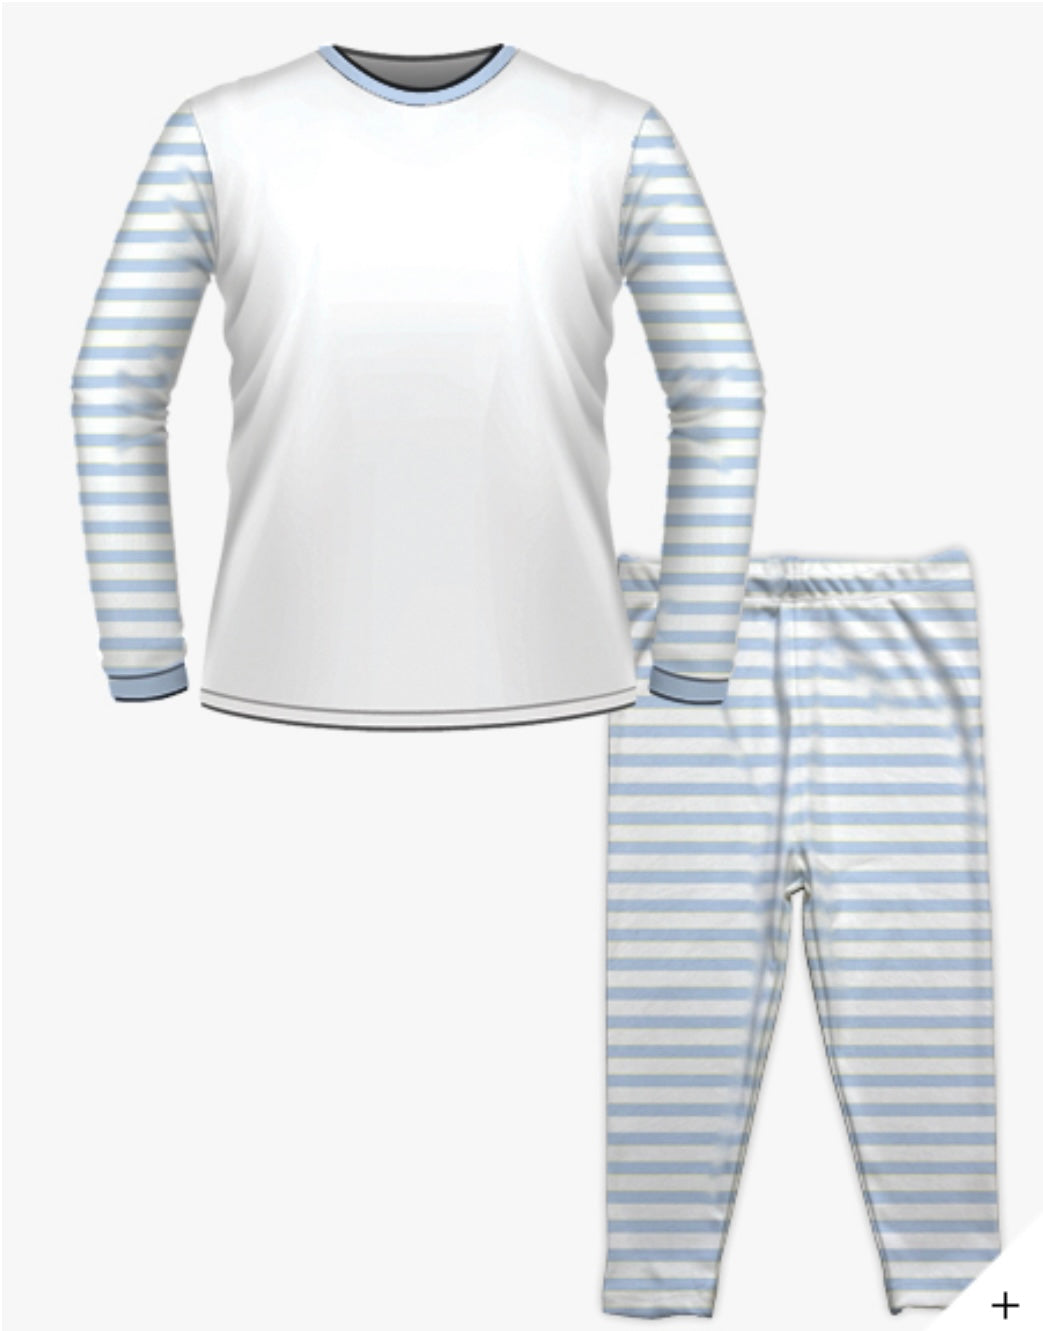 Personalised Birthday Pyjamas - Floral Letter Design